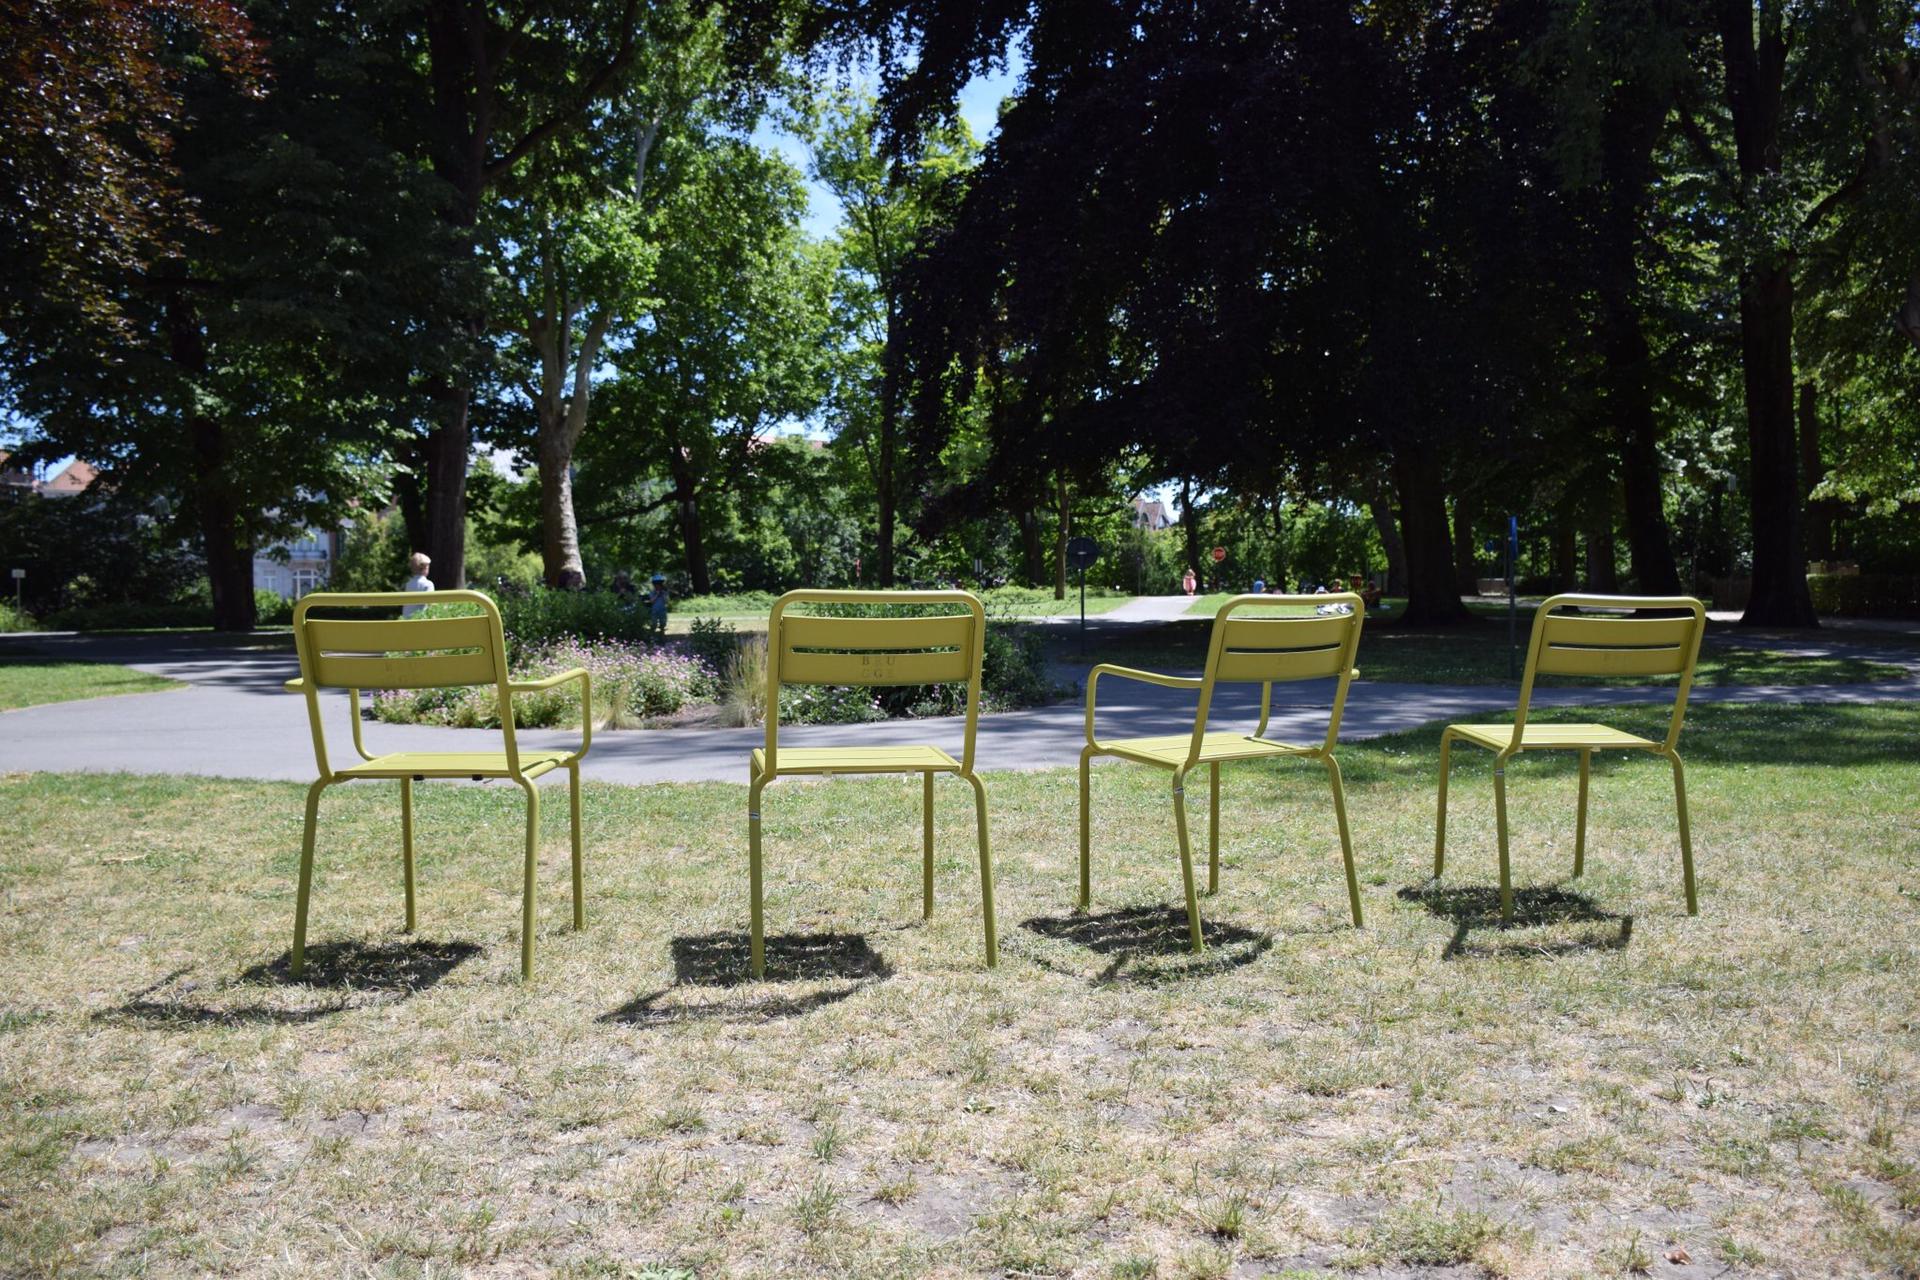 520 Groene stoelen in Brugse stadsparken